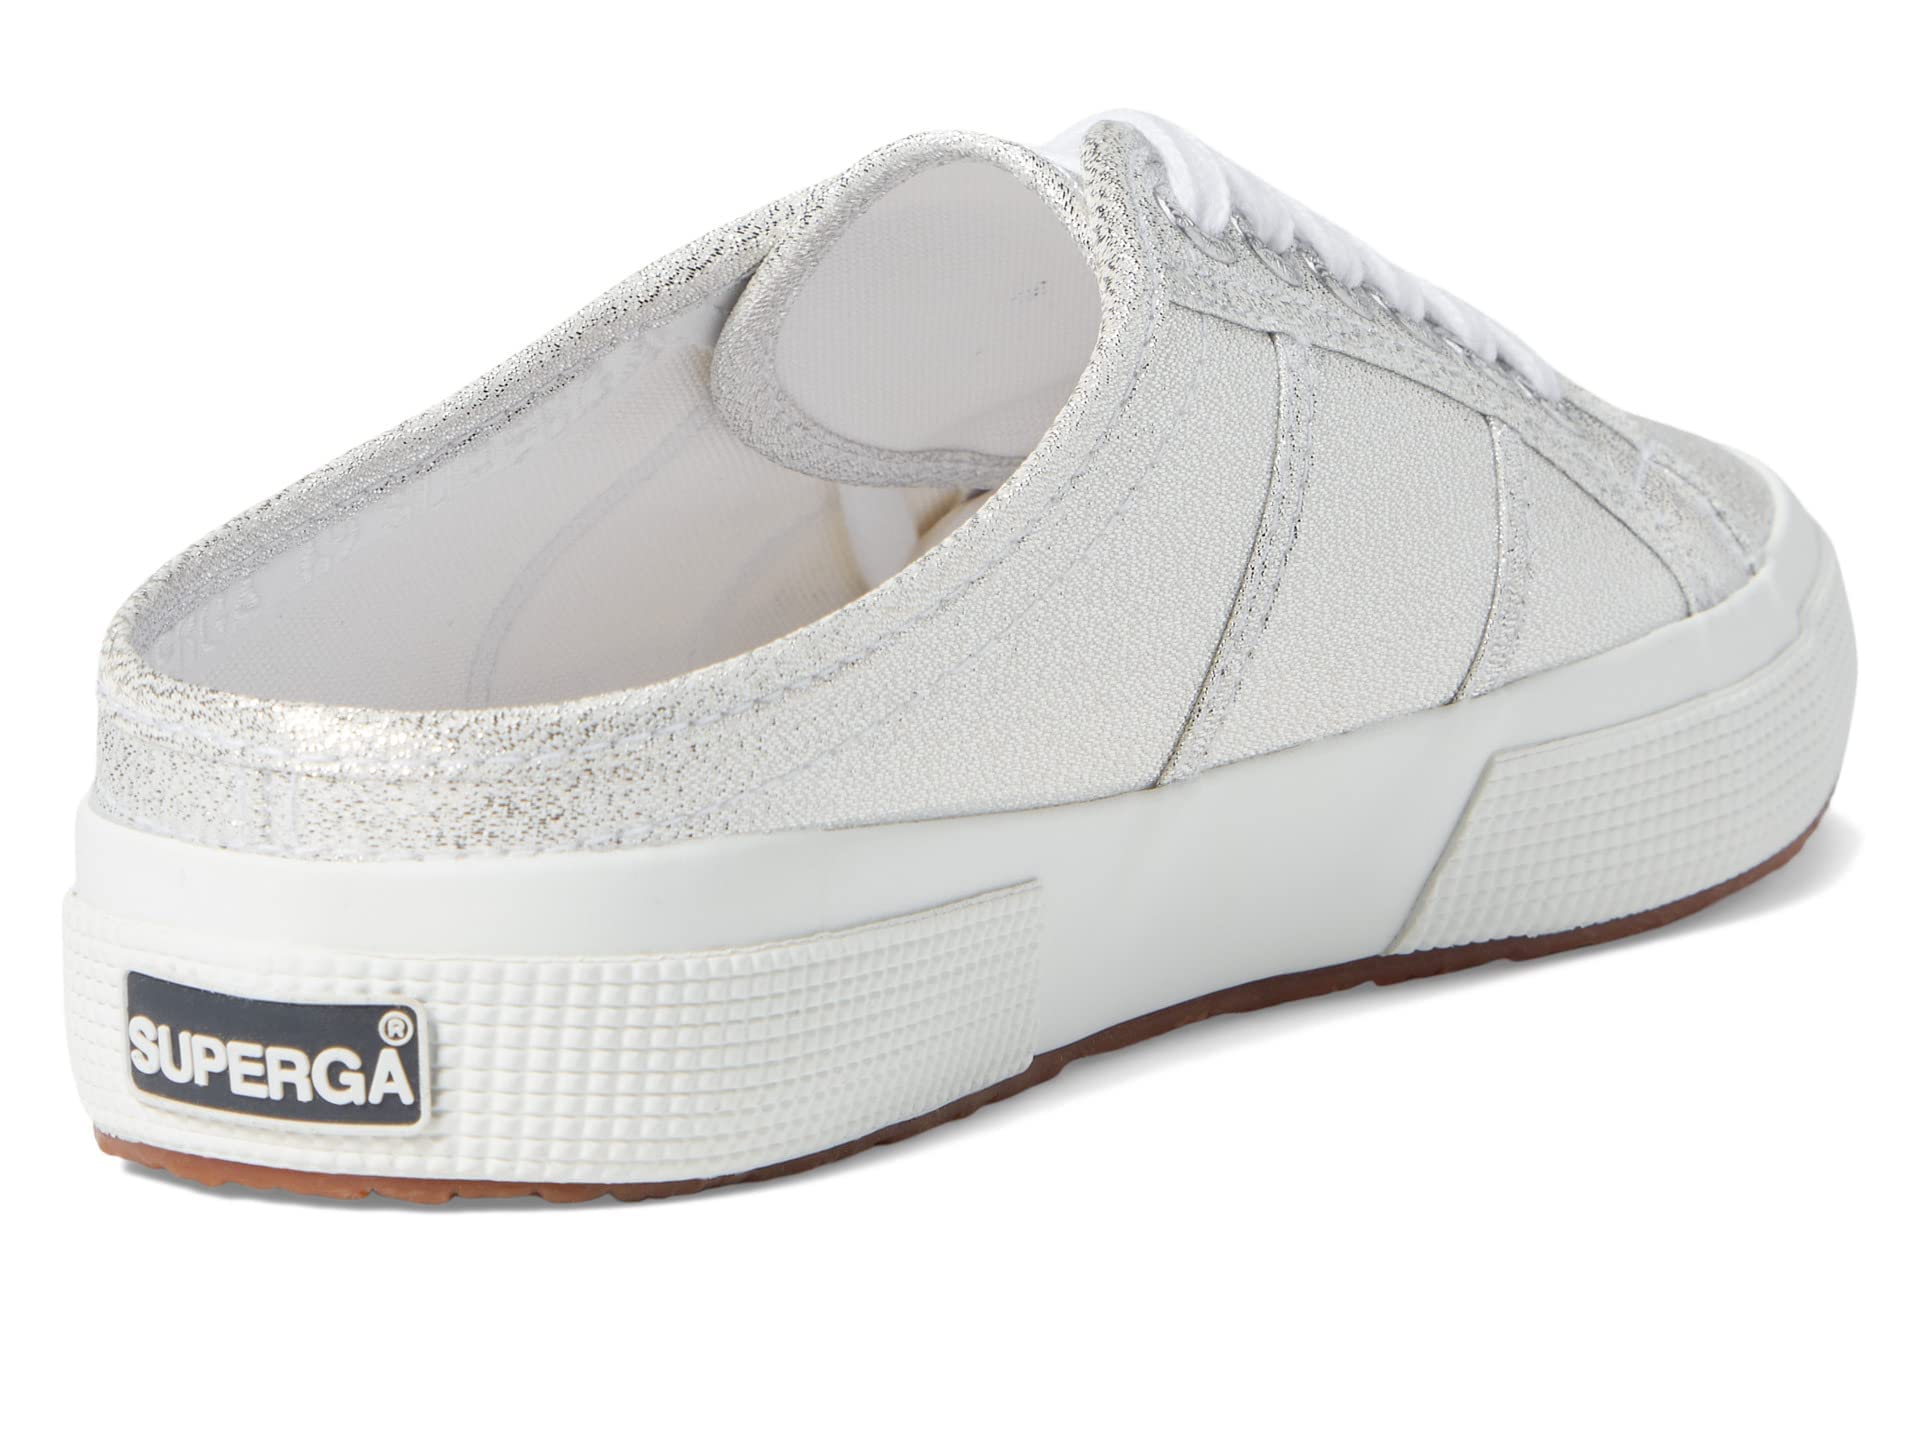 Superga Unisex-Adult S111zww Sneaker